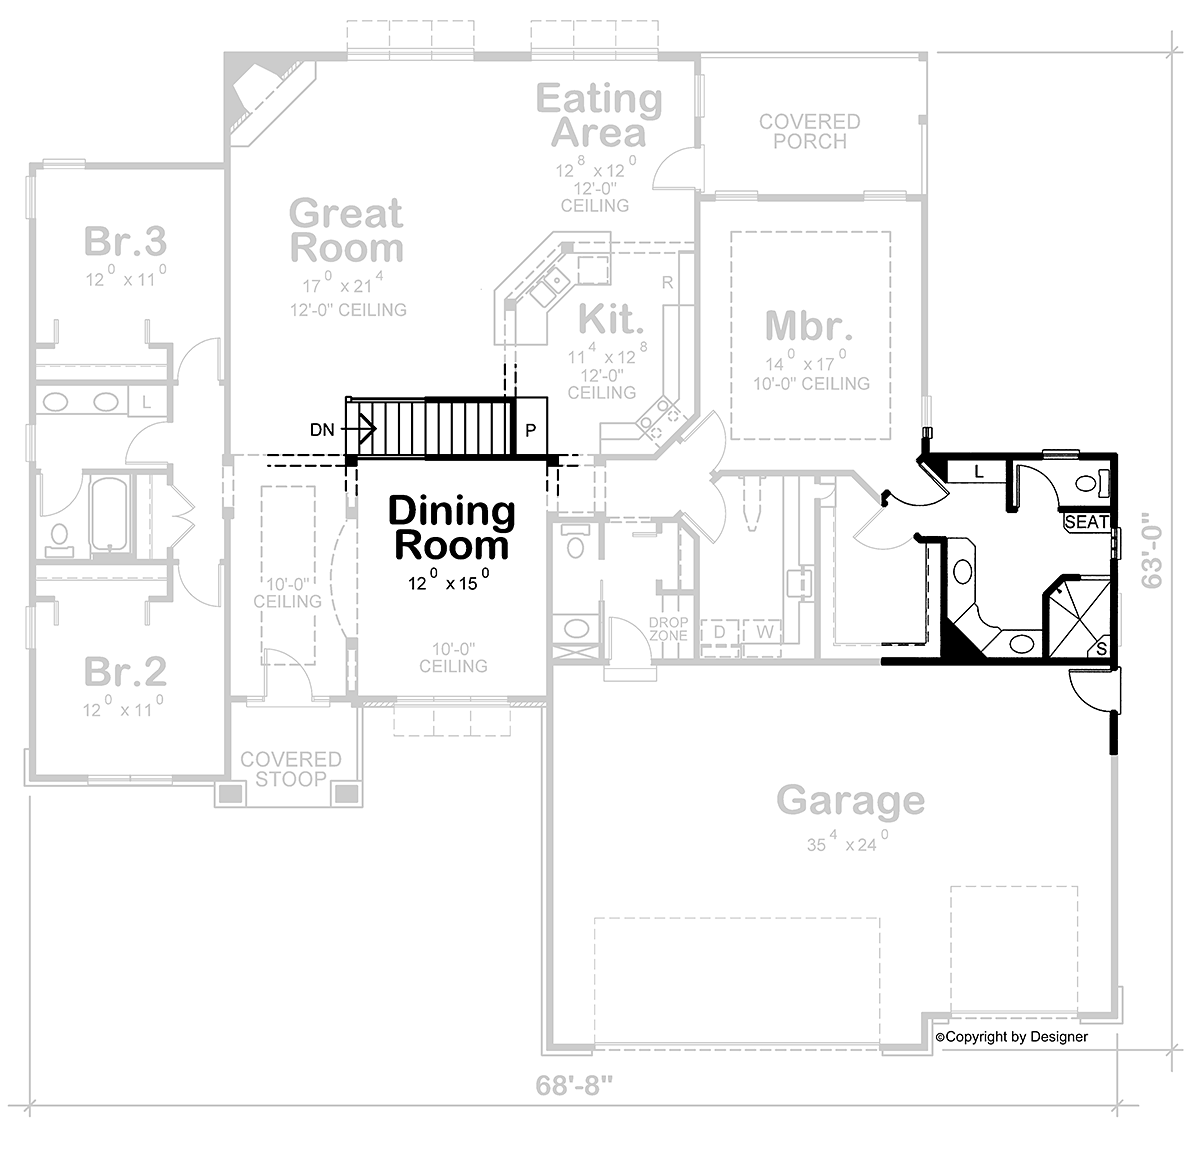 House Plan 81447 Alternate Level One